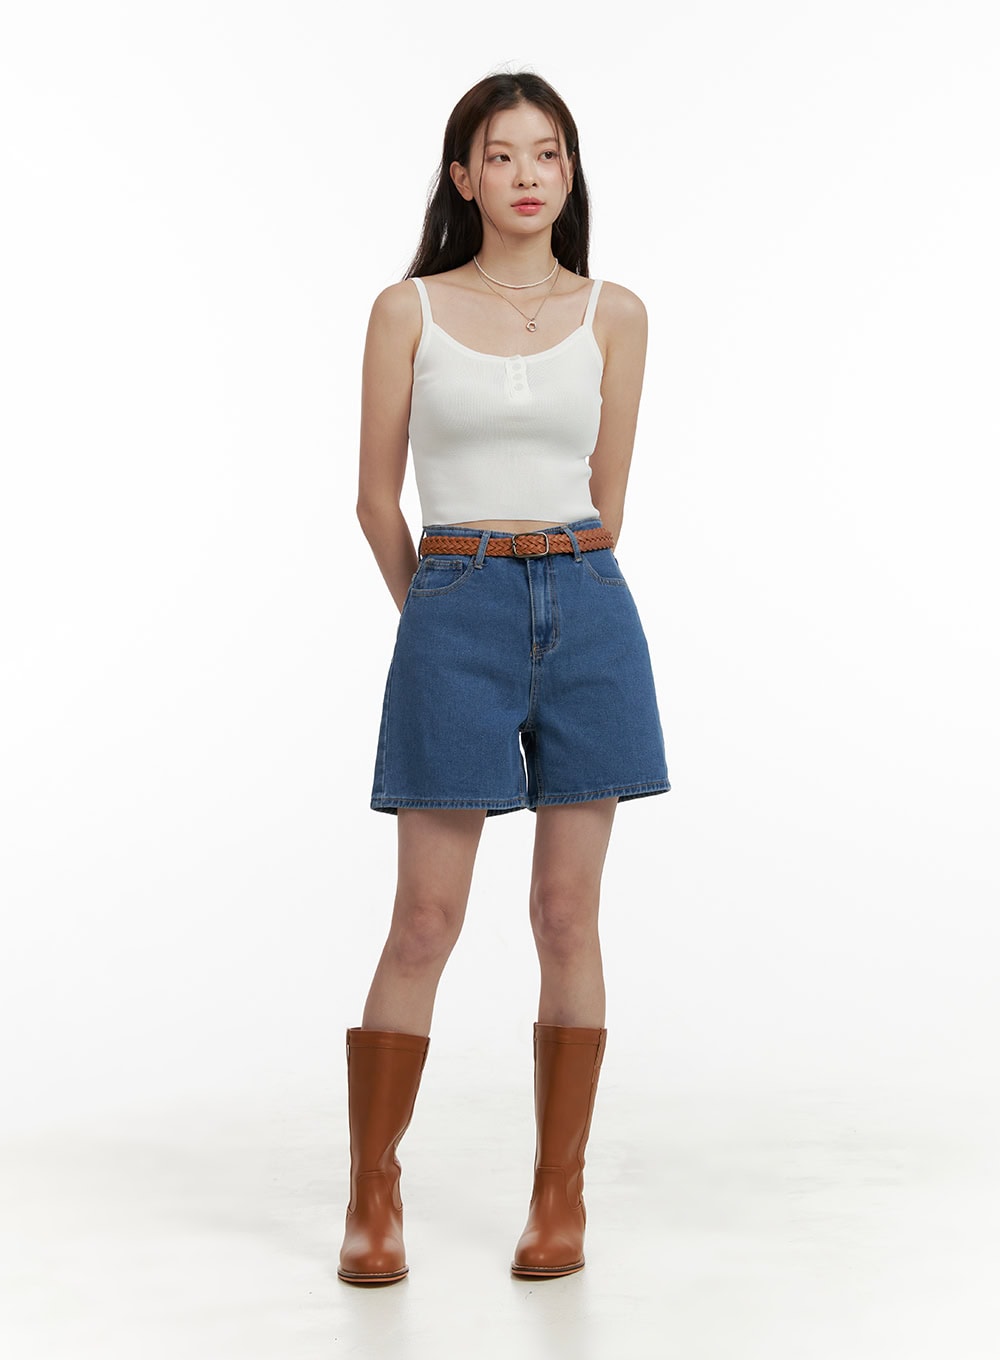 high-waist-blue-denim-shorts-ou413